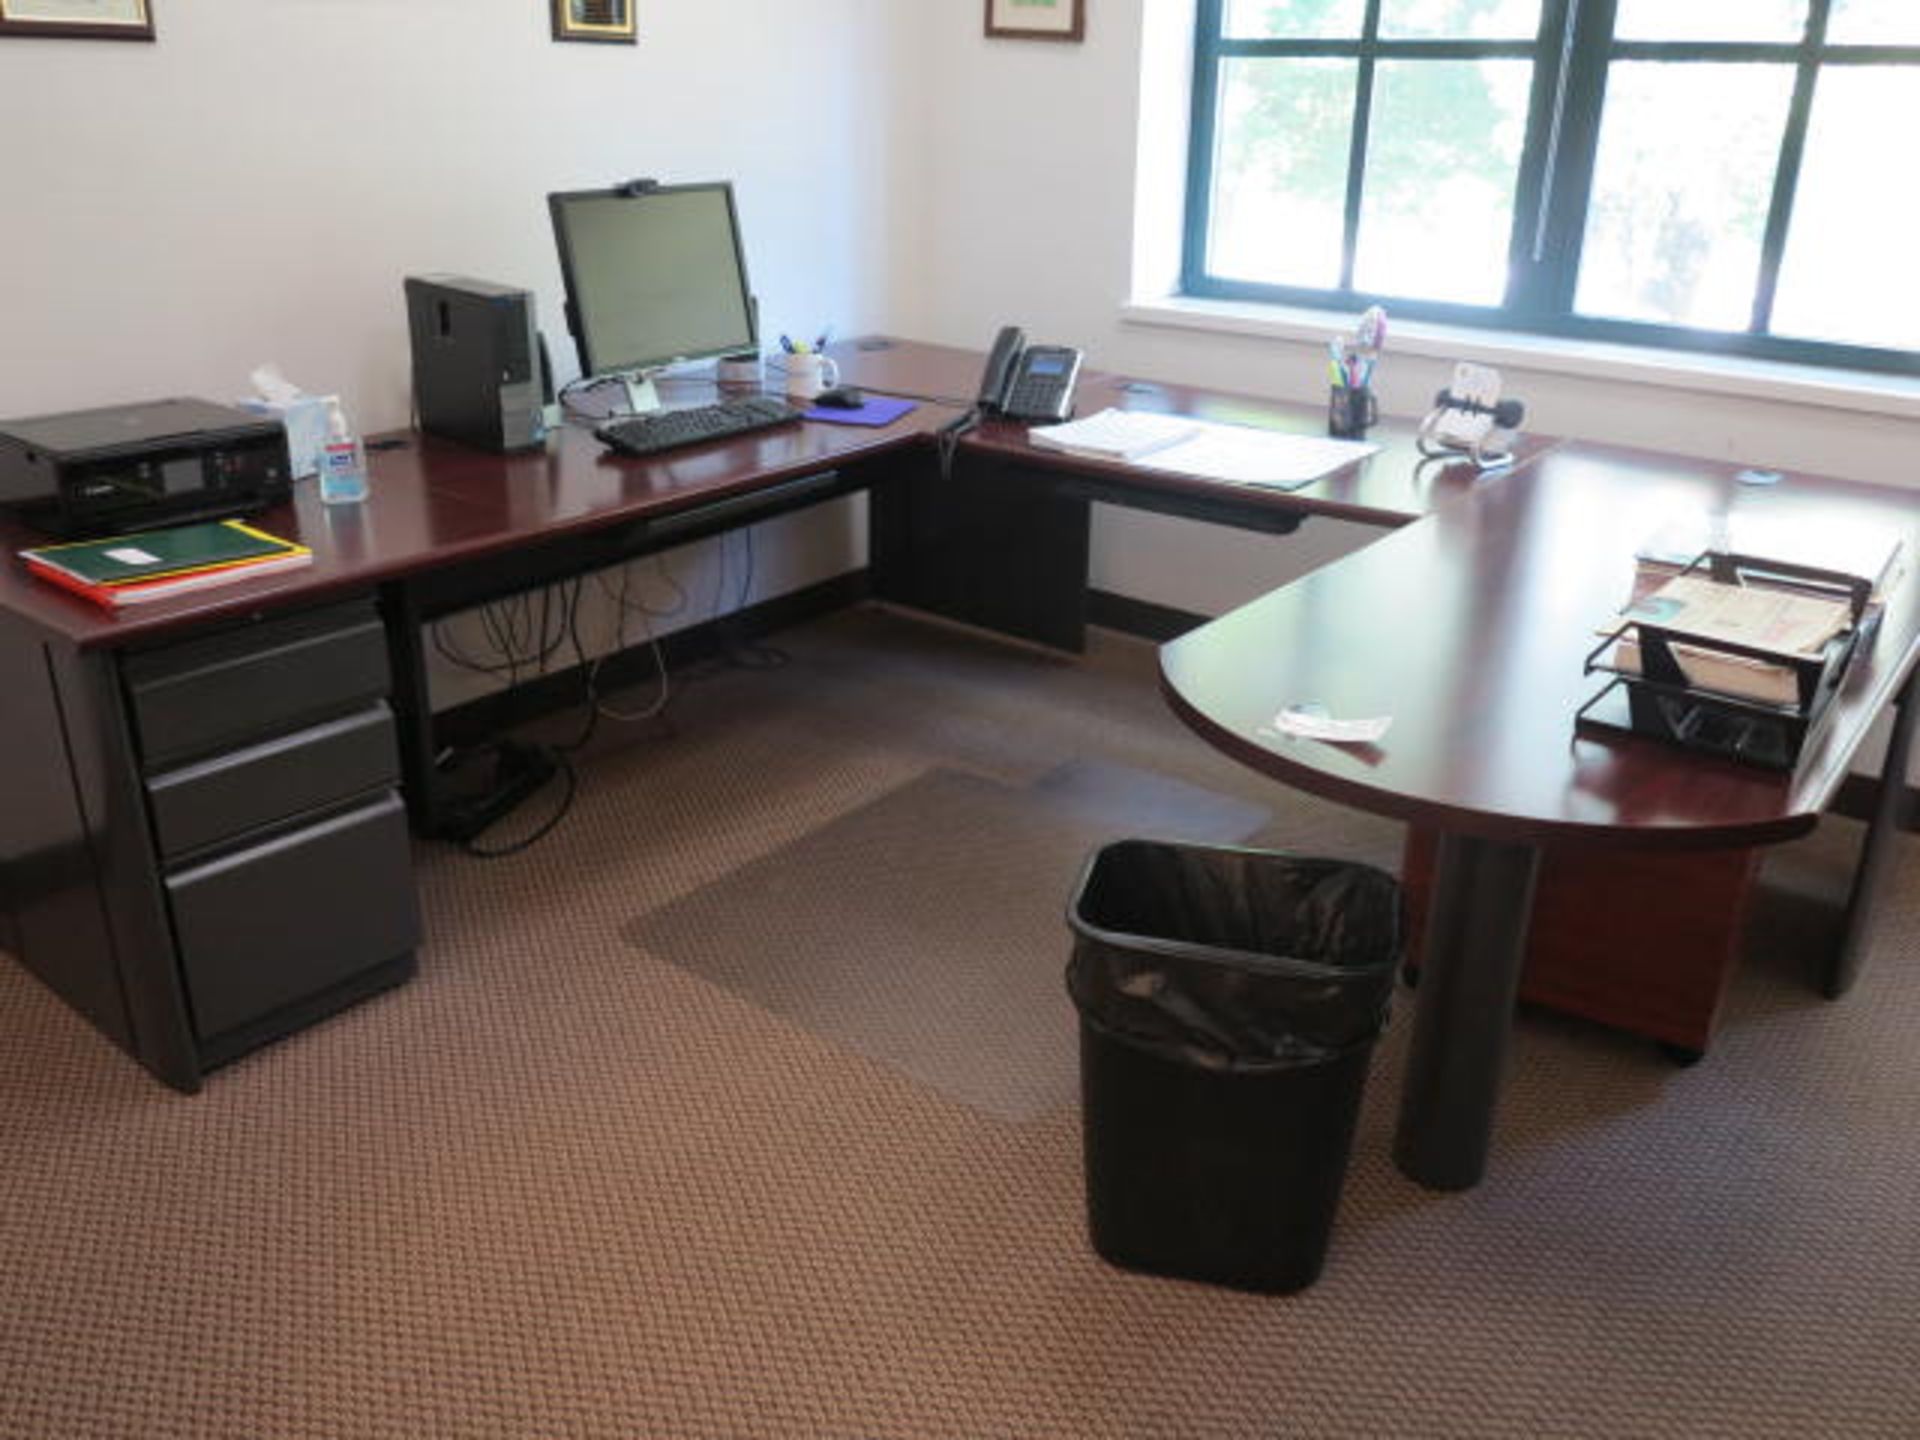 Lot 96'' x 42'' x 72'' U Shaped Executive Desk, Credenza and Bookshelf